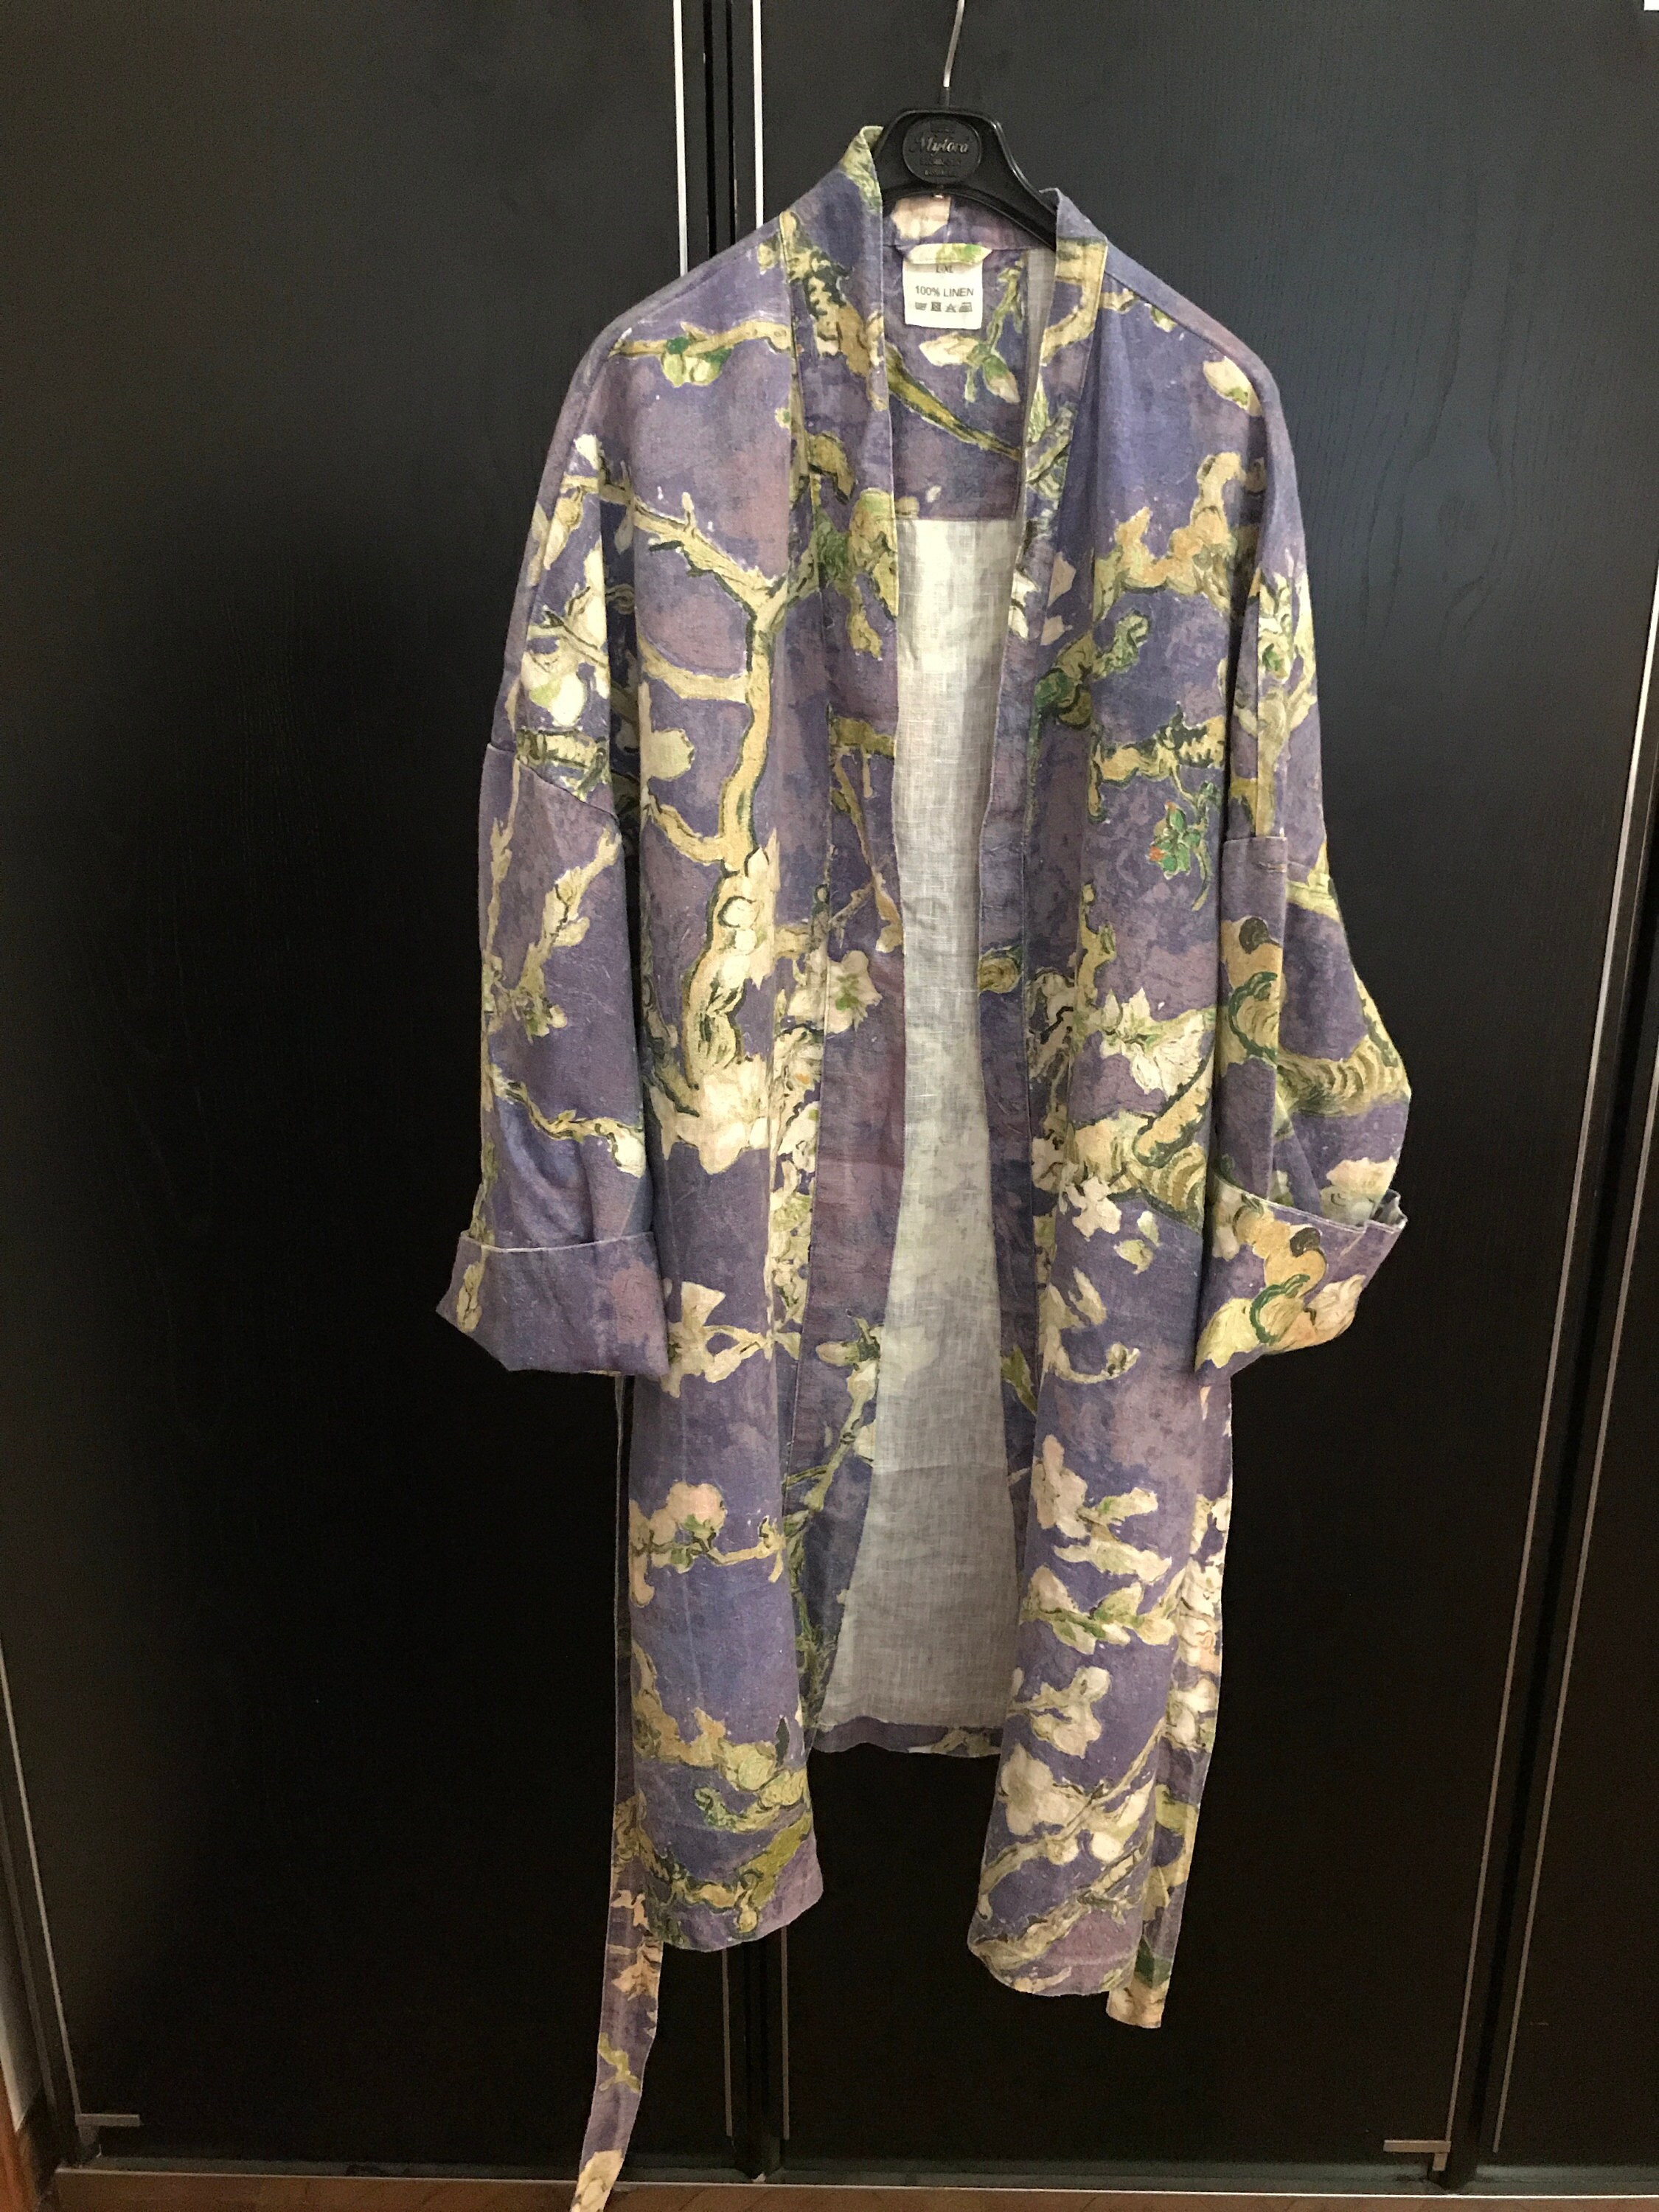 Kimono robe, Vincent van Gogh, kimono cardigan, bathrobe, Almond ...